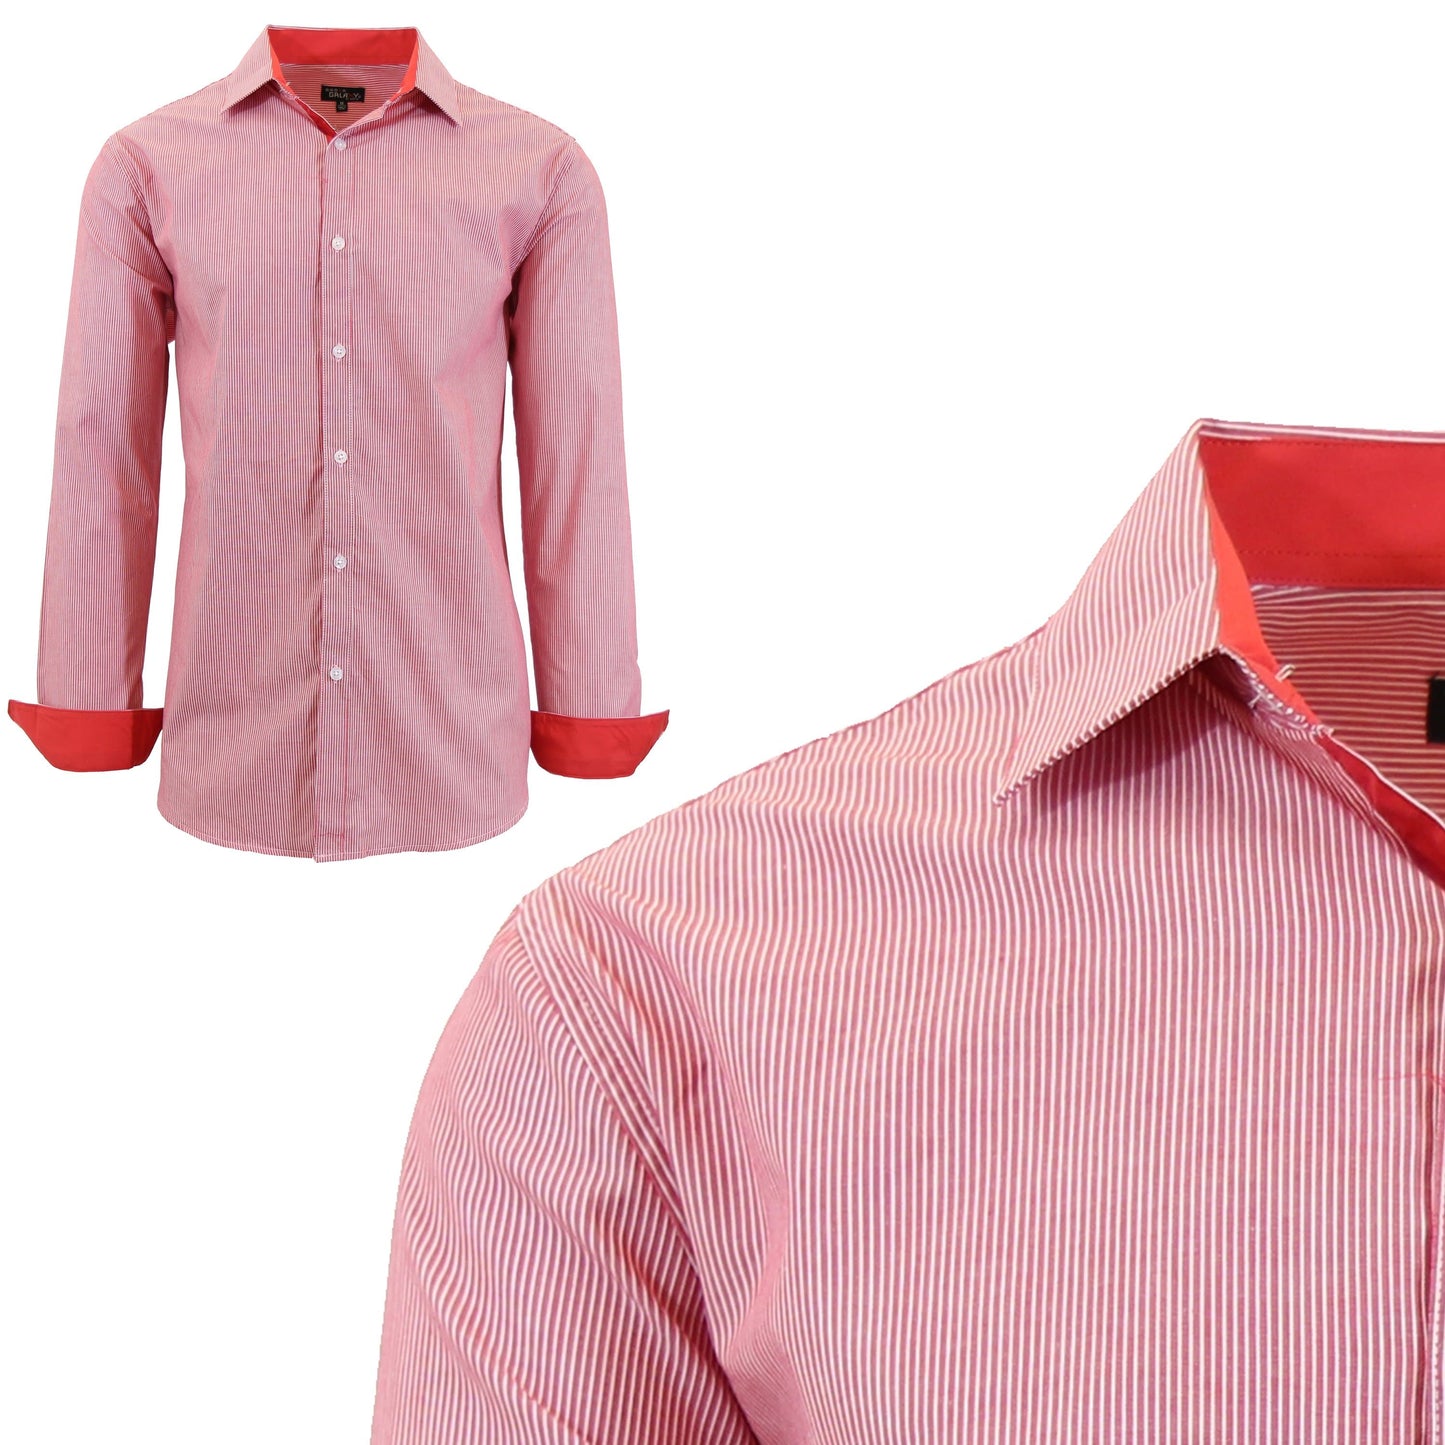 Men's Long Sleeve Cotton Dress Shirts - GalaxybyHarvic